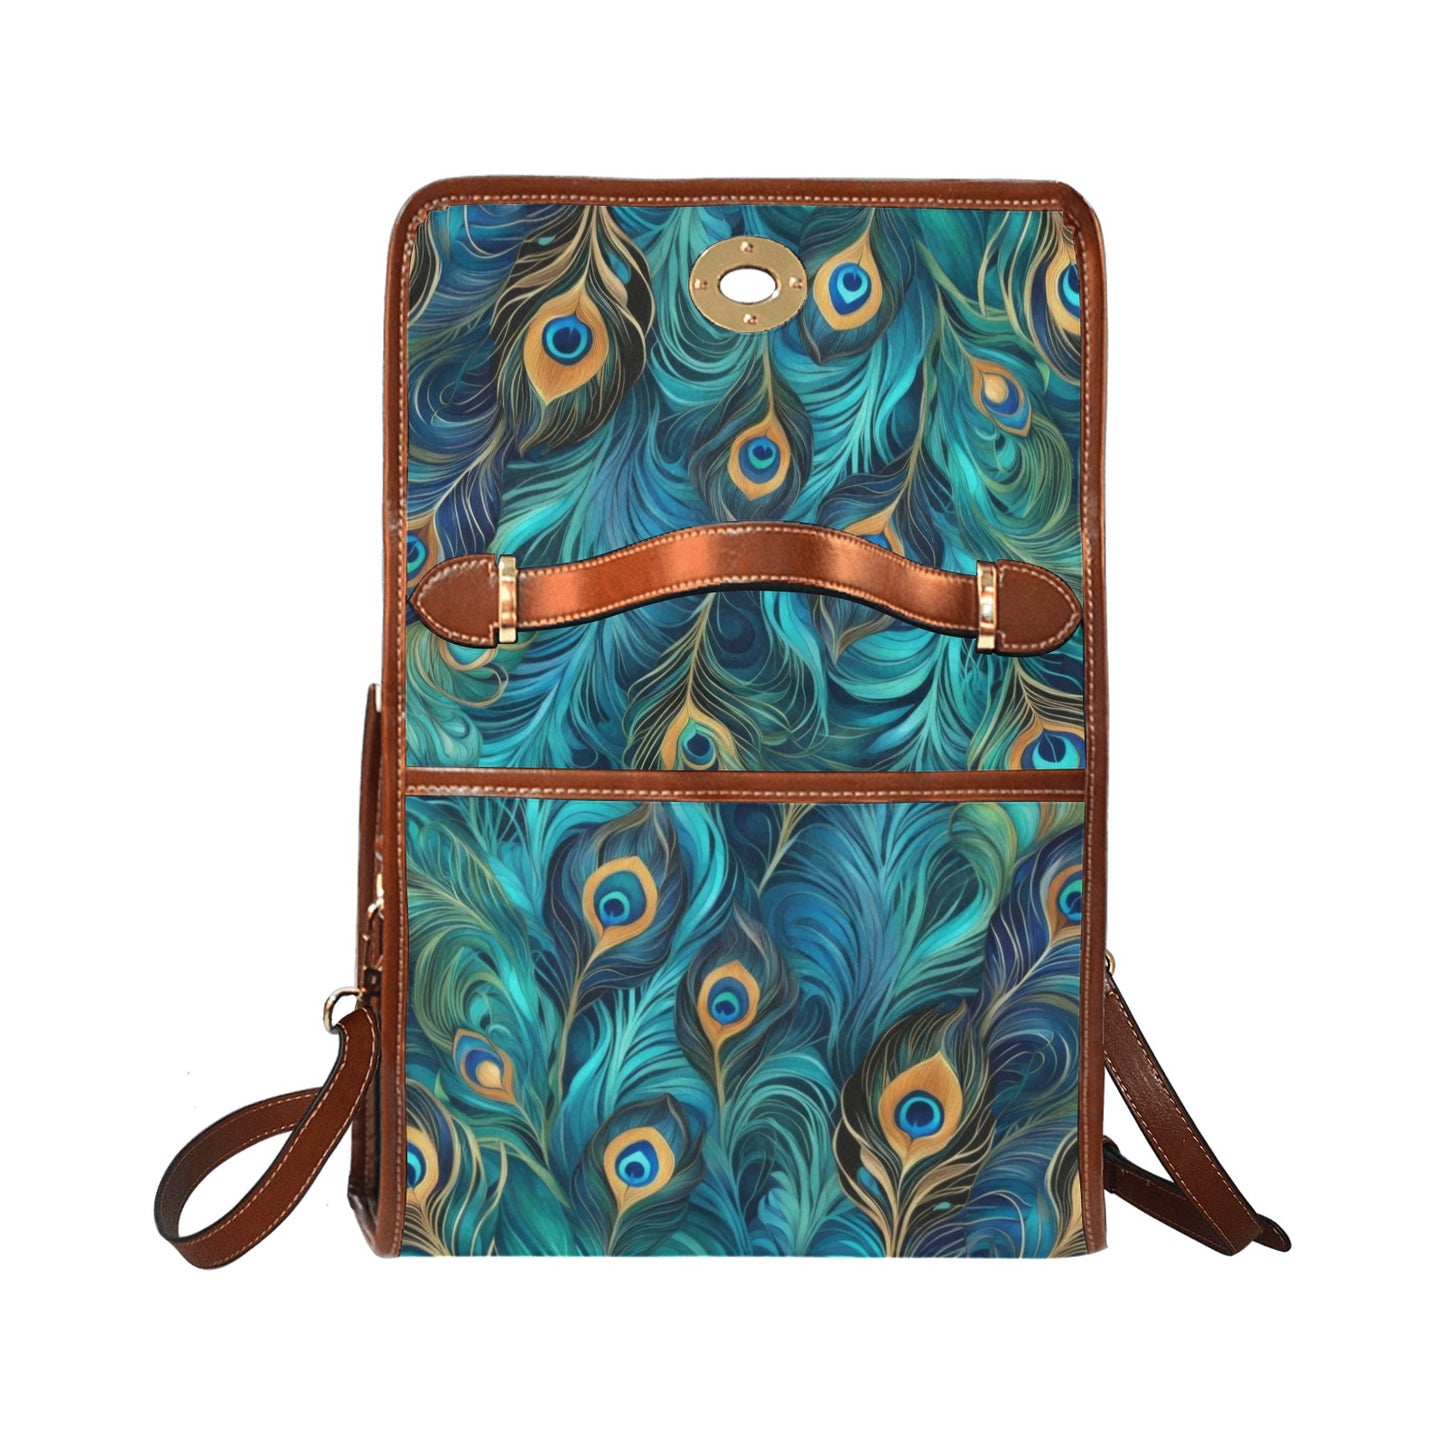 Turquoise Teal Peacock Canvas Handbag Purse